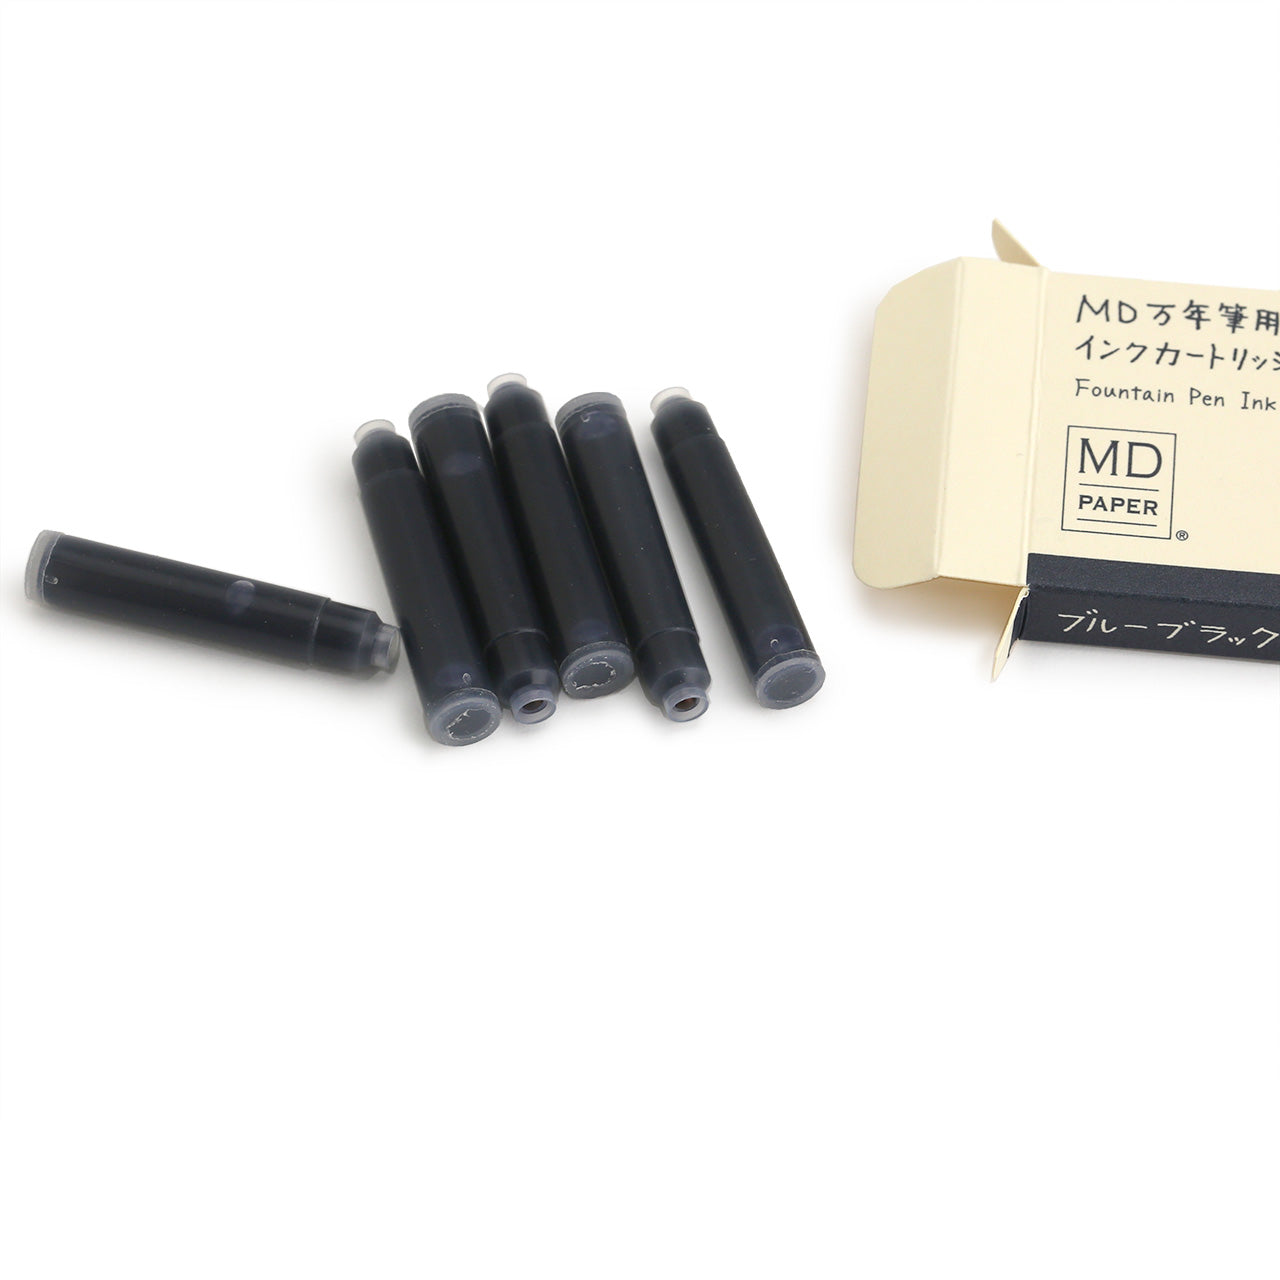 Midori fountain pen ink cartridges packet